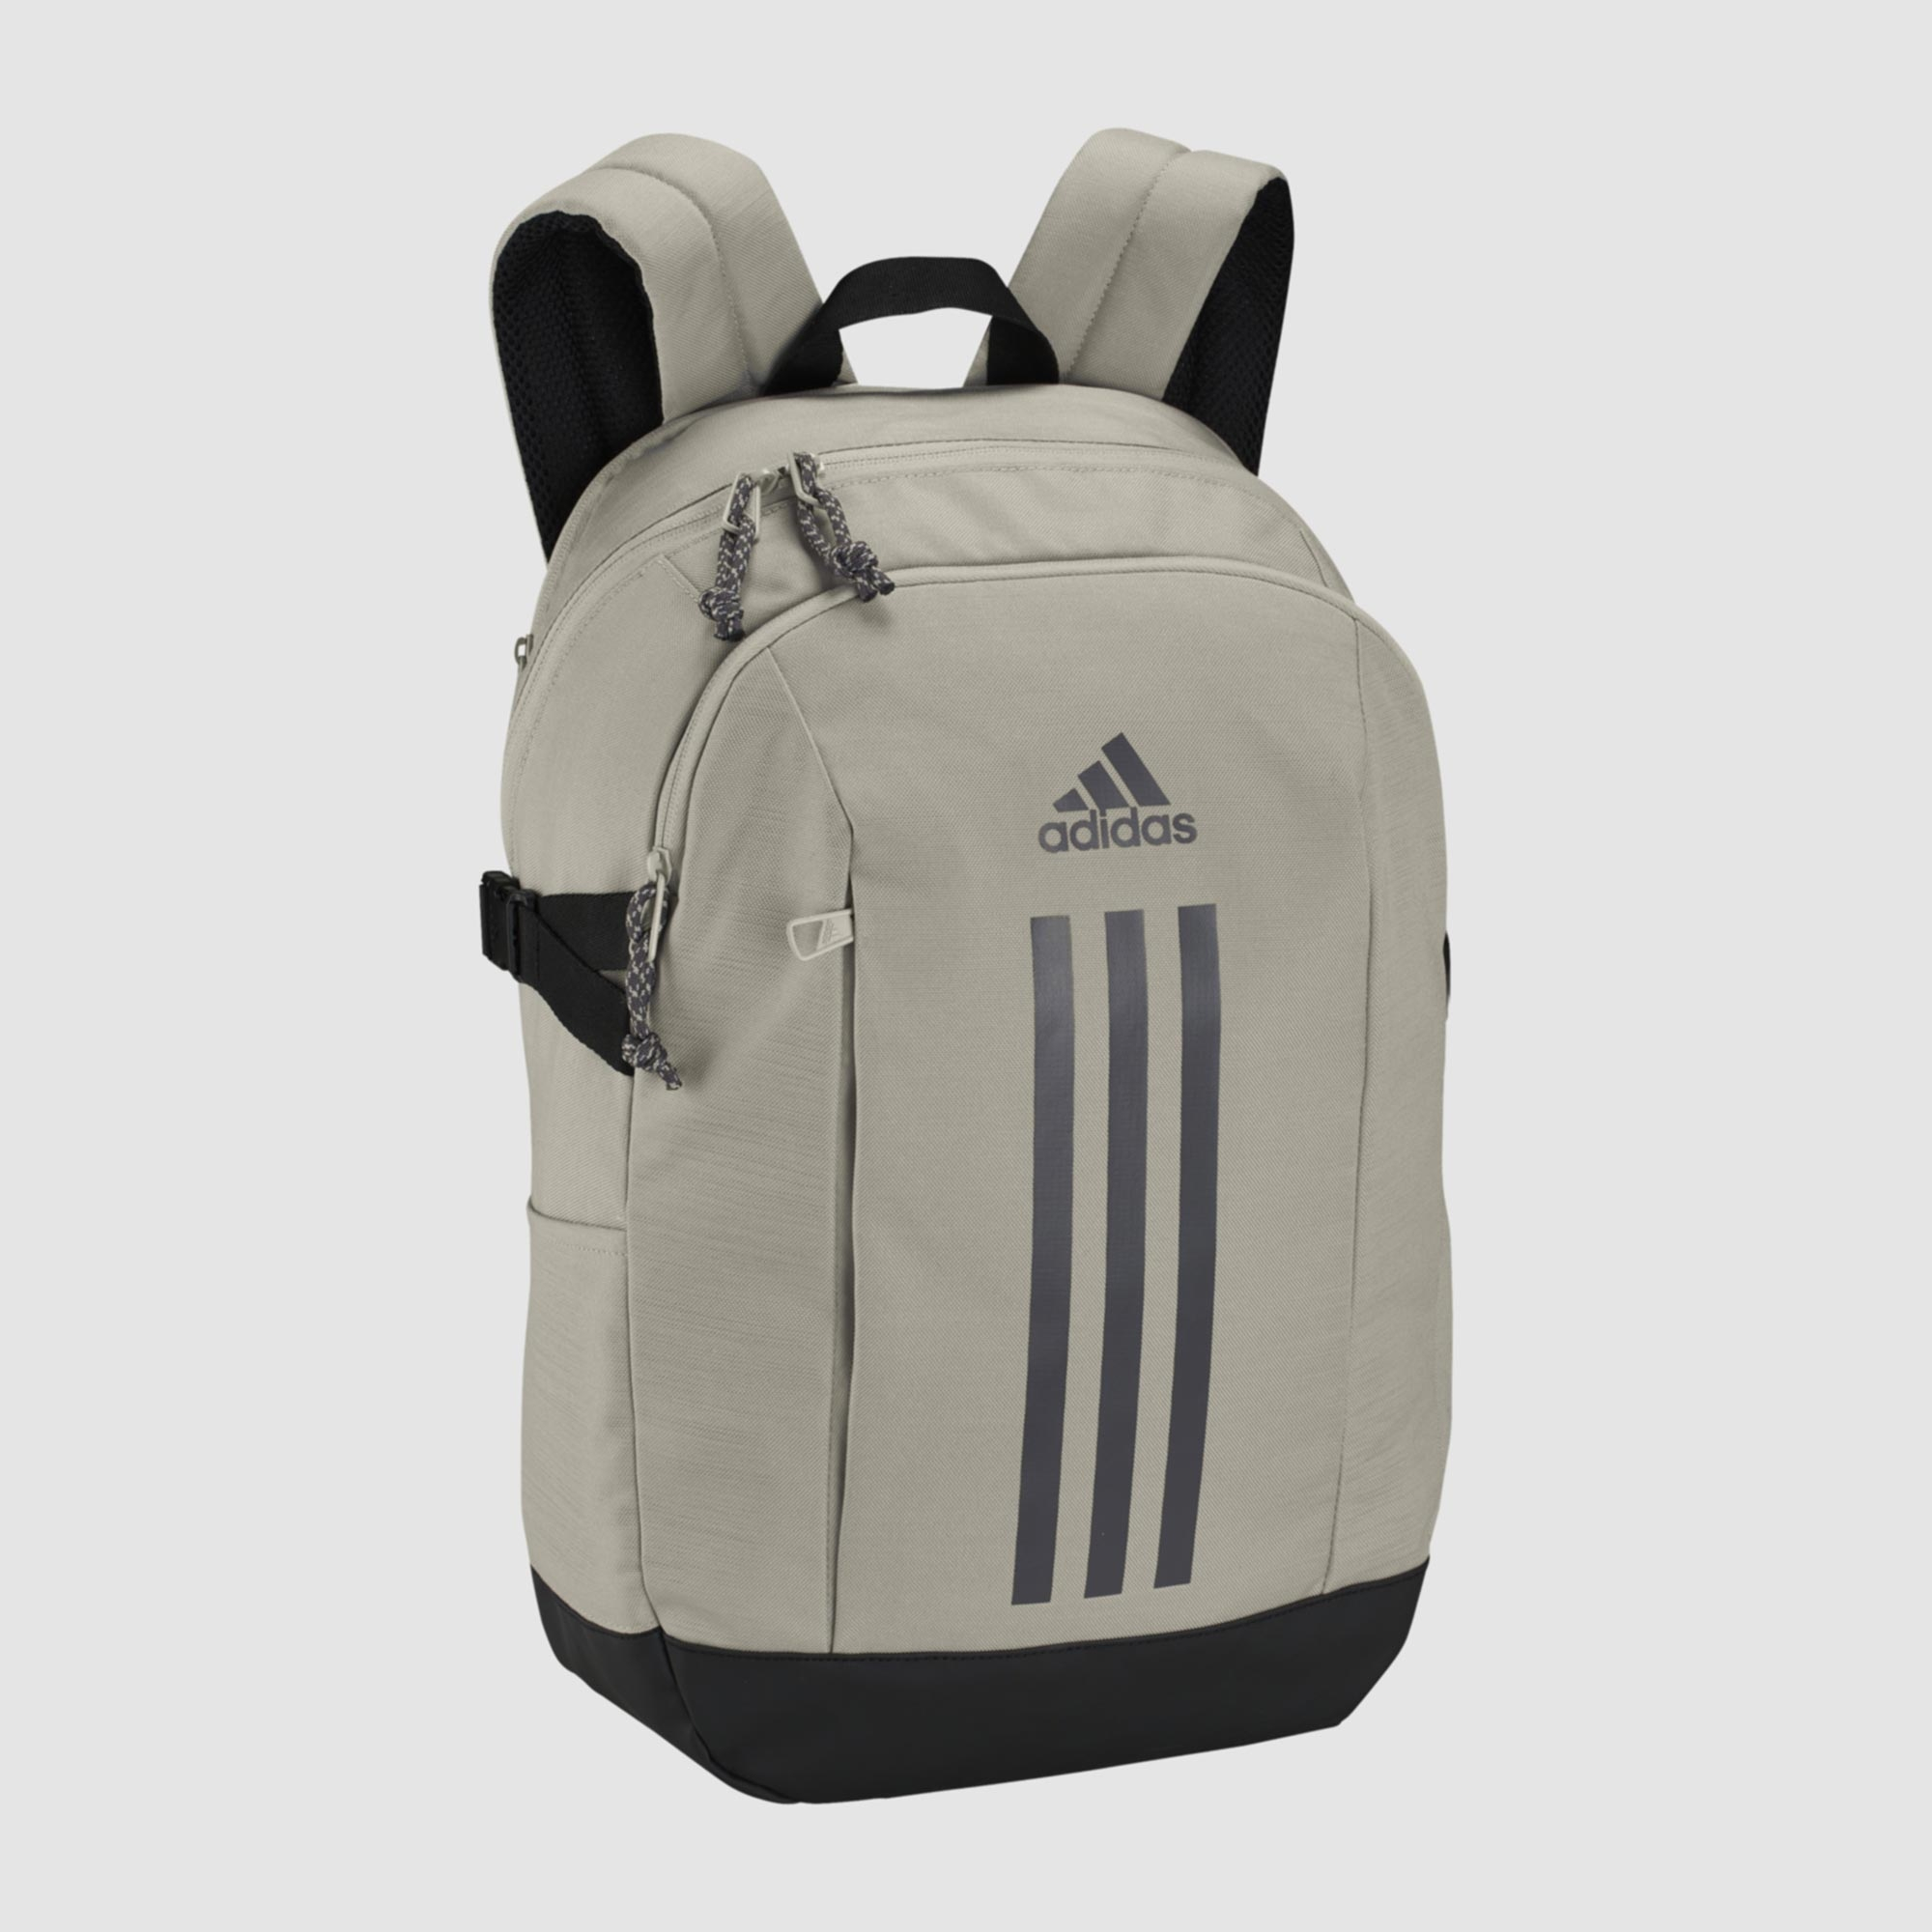 adidas Power VII Backpack Fern/Grey 26 Litres